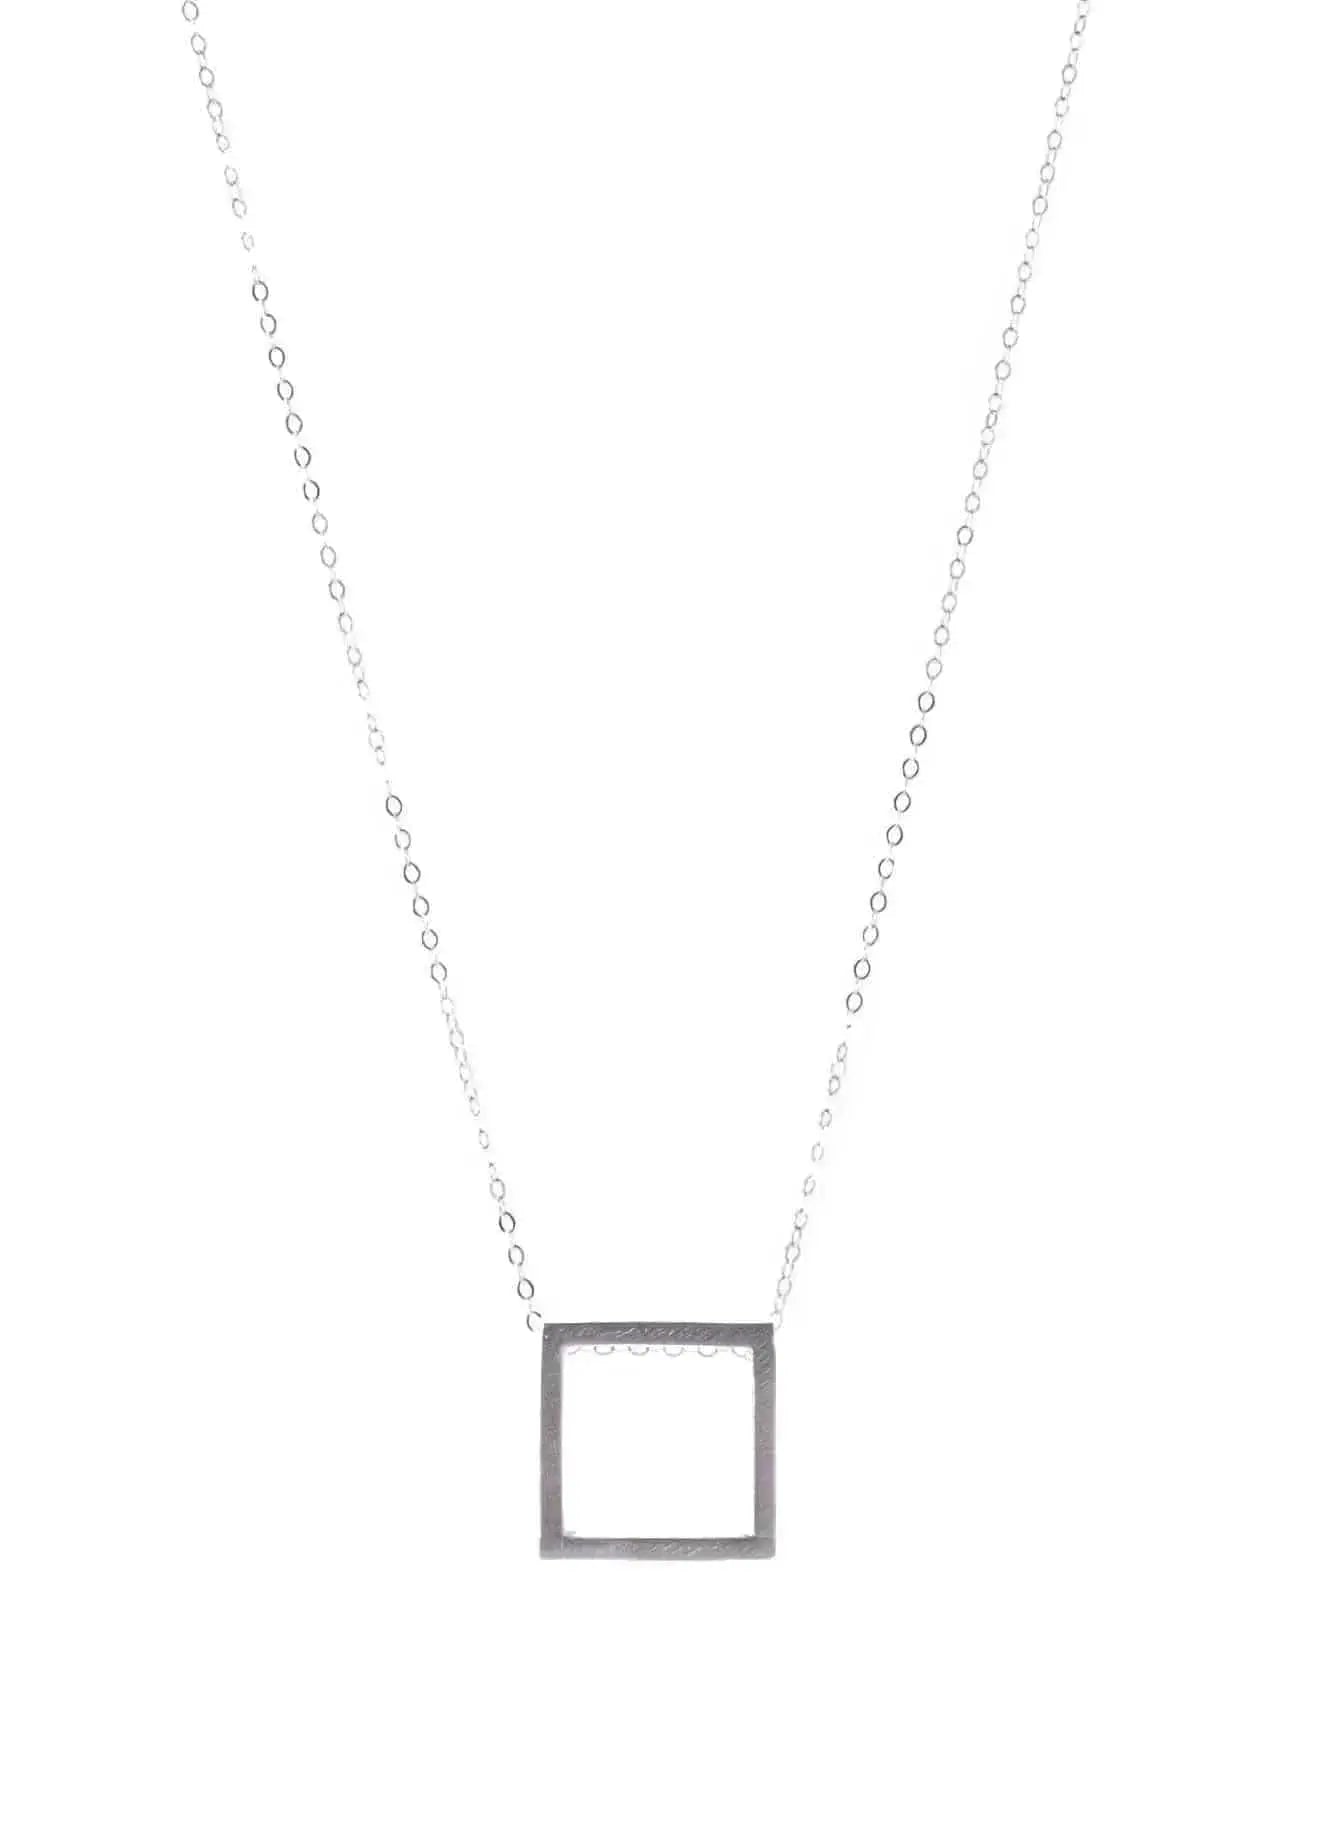 Aligned Square Sterling Silver Necklace Liv & B Designs